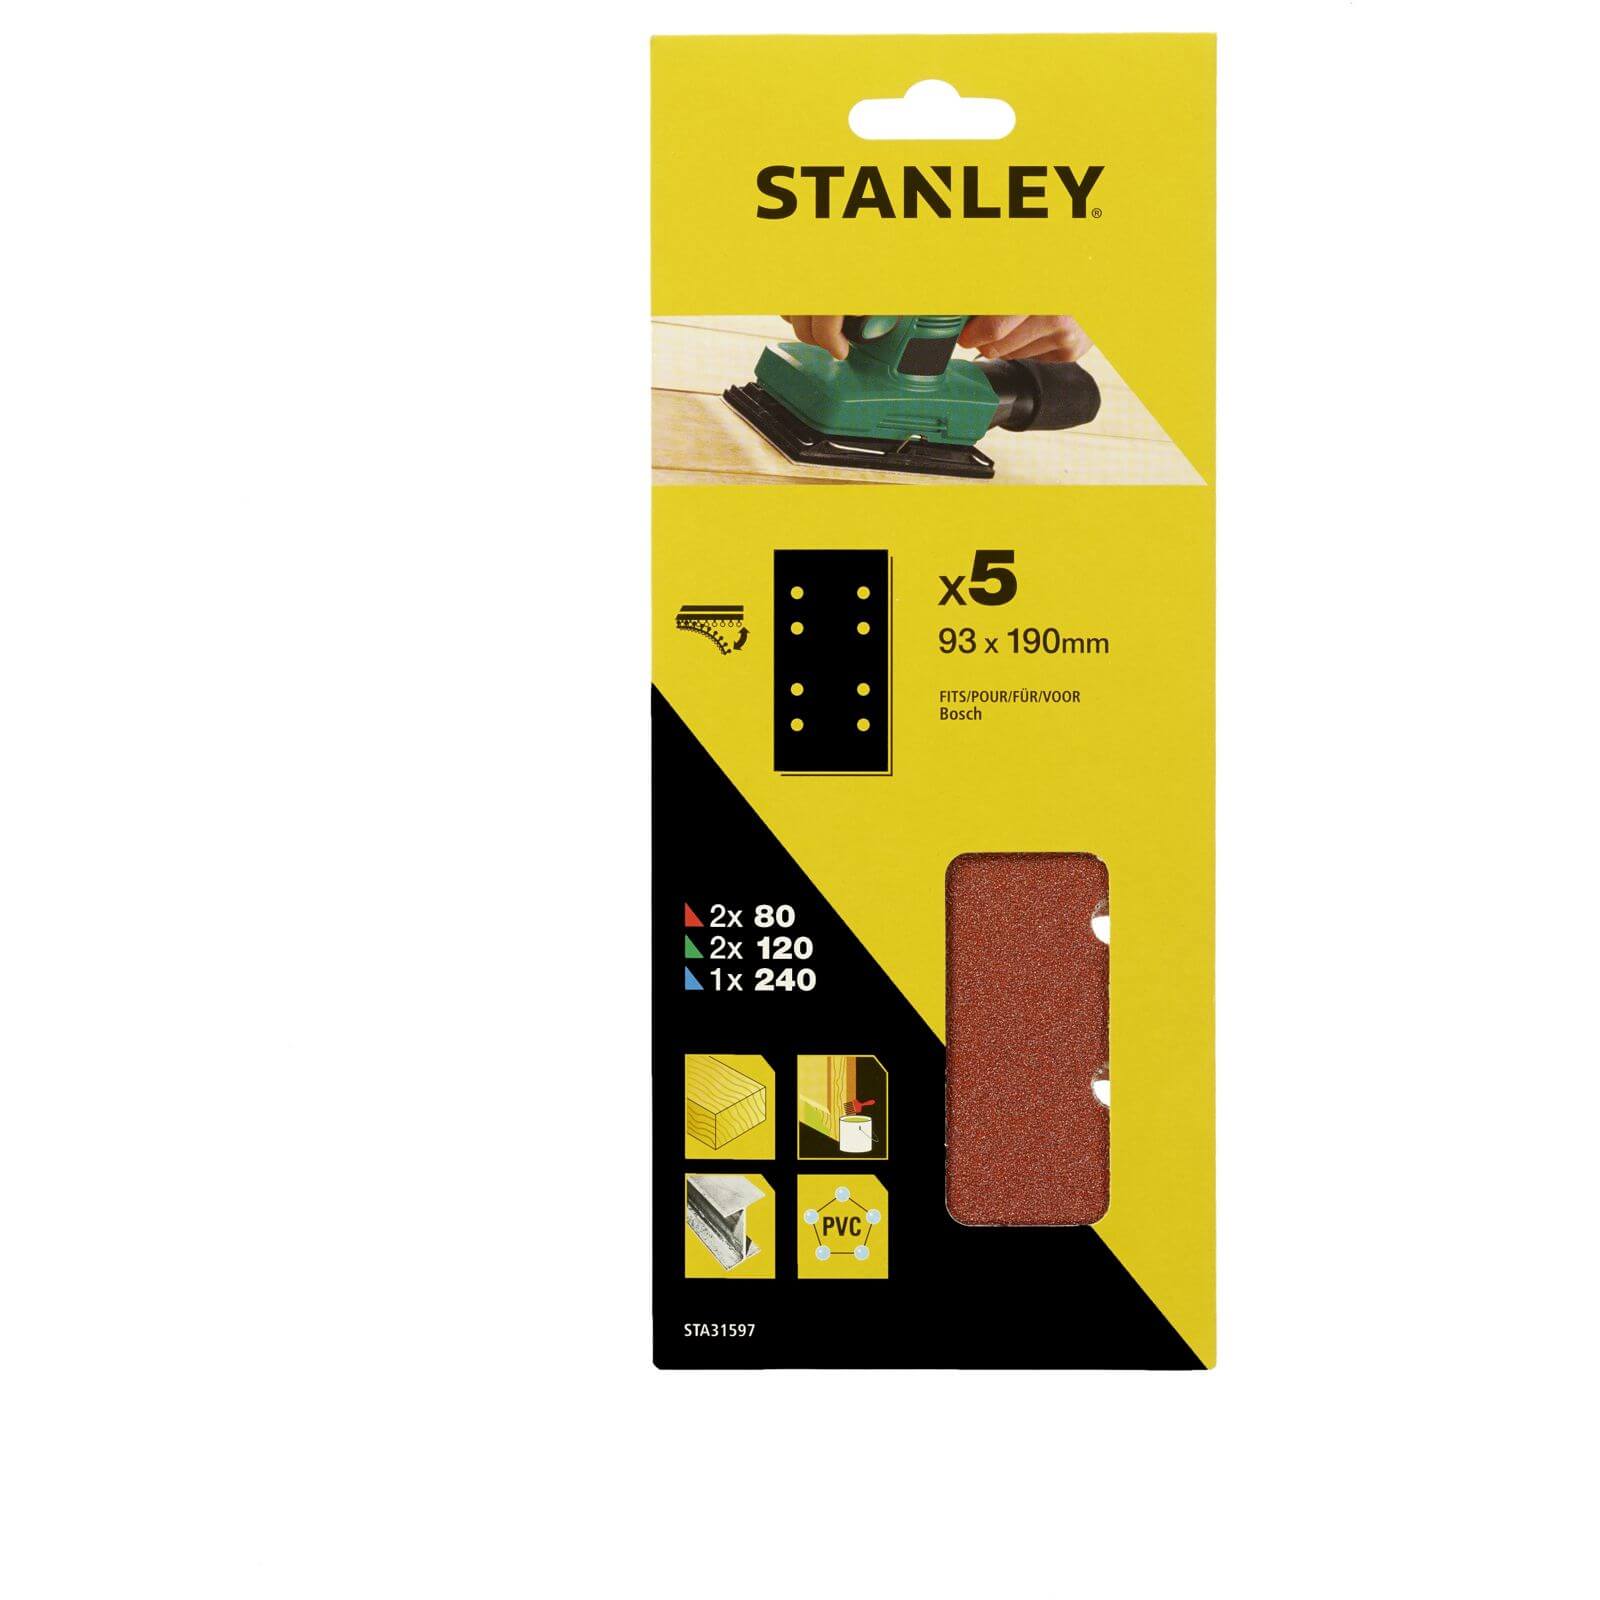 Photo of Stanley 1/3 Sheet Sander Mixed Hook & Loop Sanding Sheets - Sta31597-xj